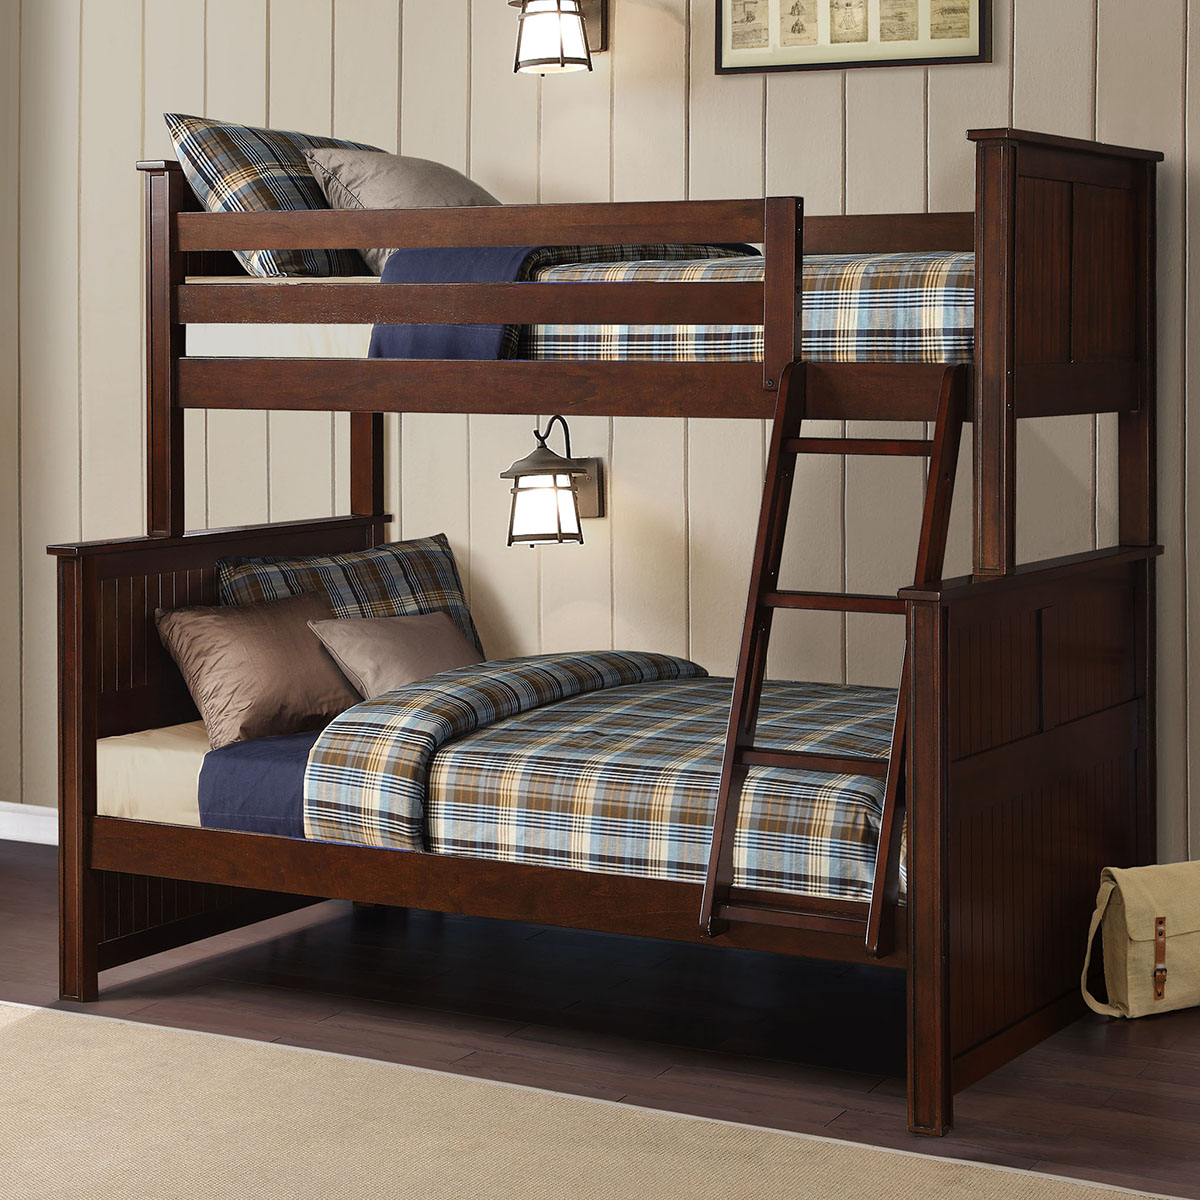 bunk beds at costco